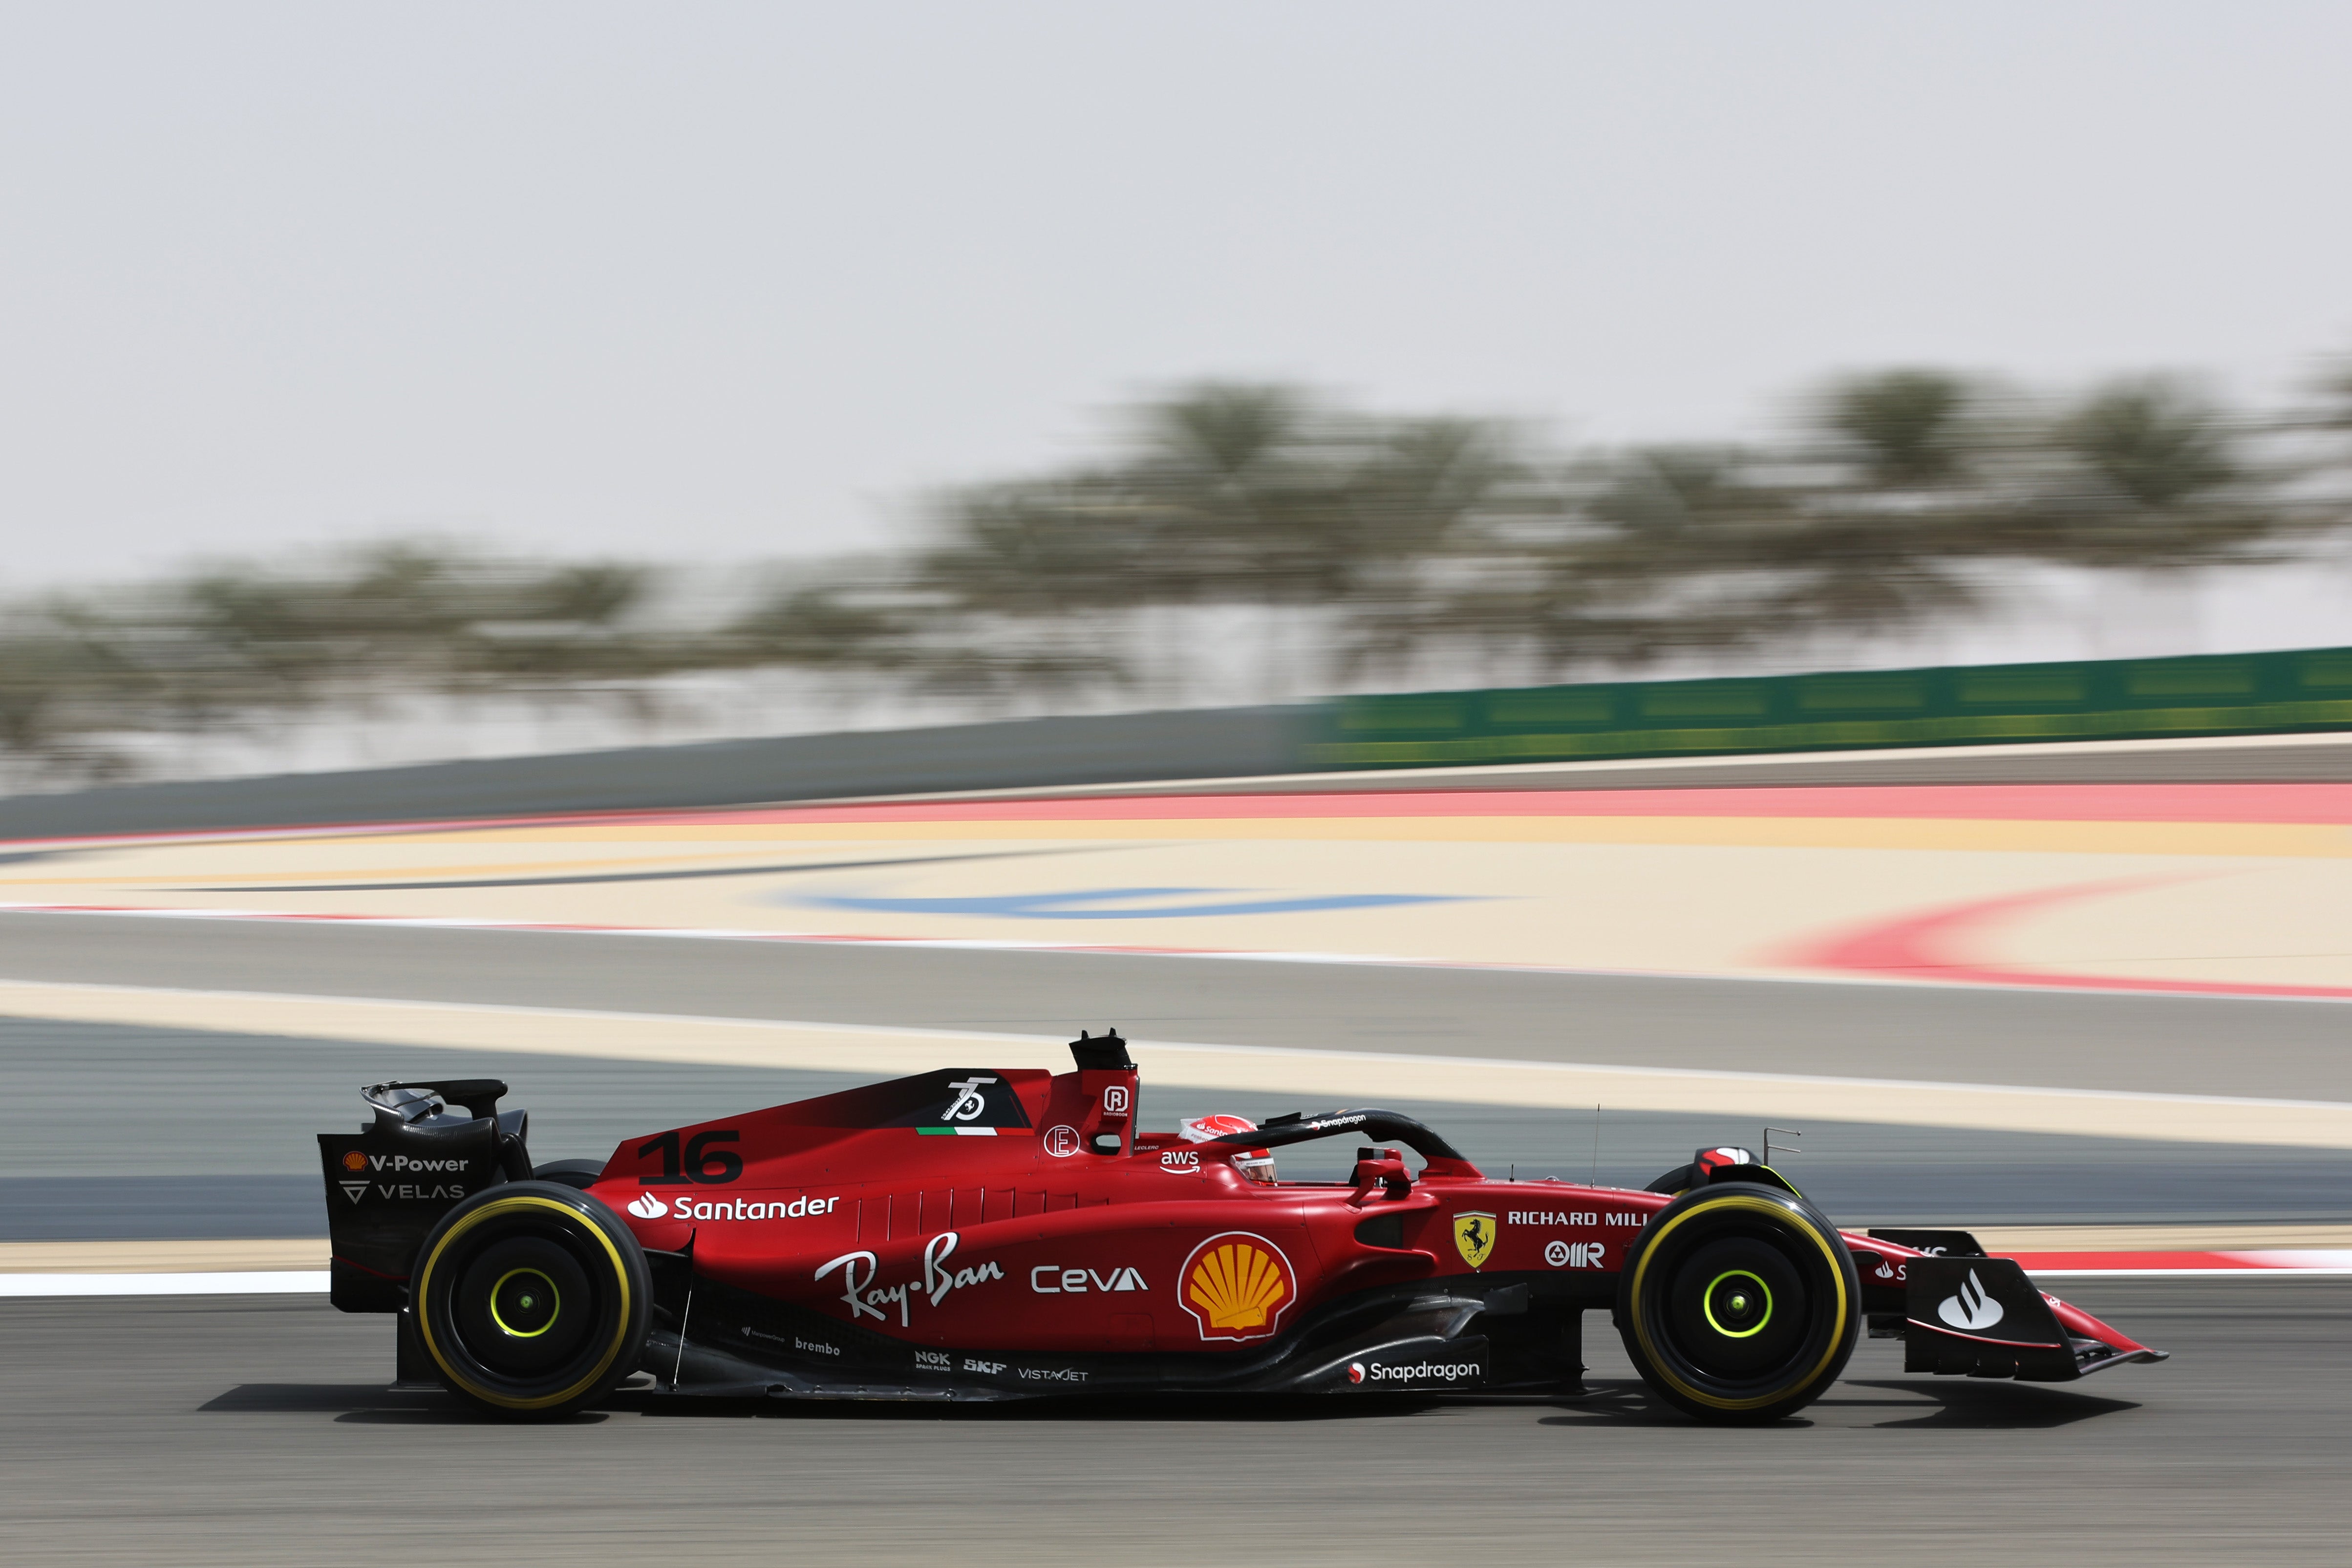 Ferrari had a strong performance in preseason testing